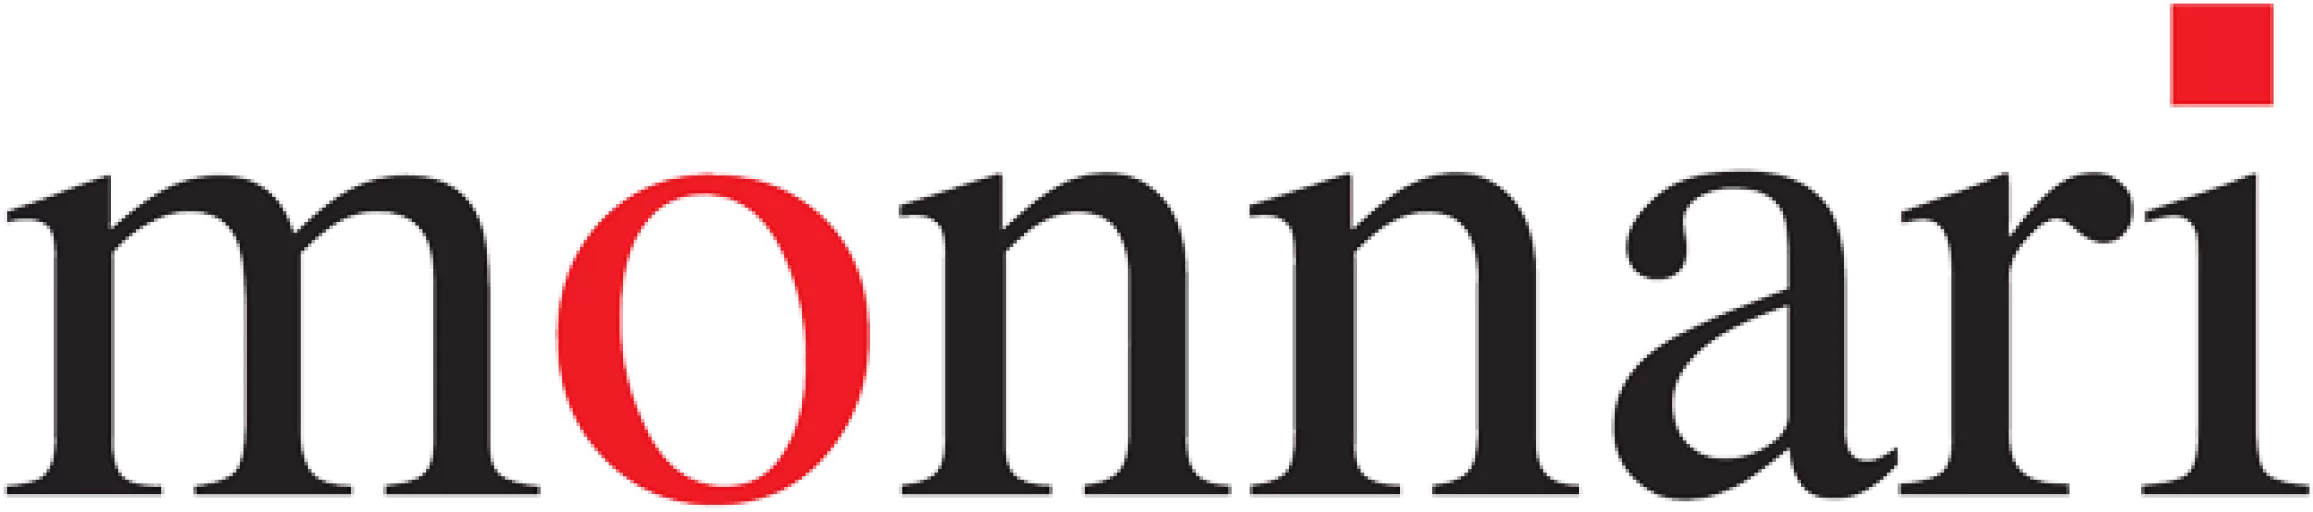 Logo firmy Monnari.